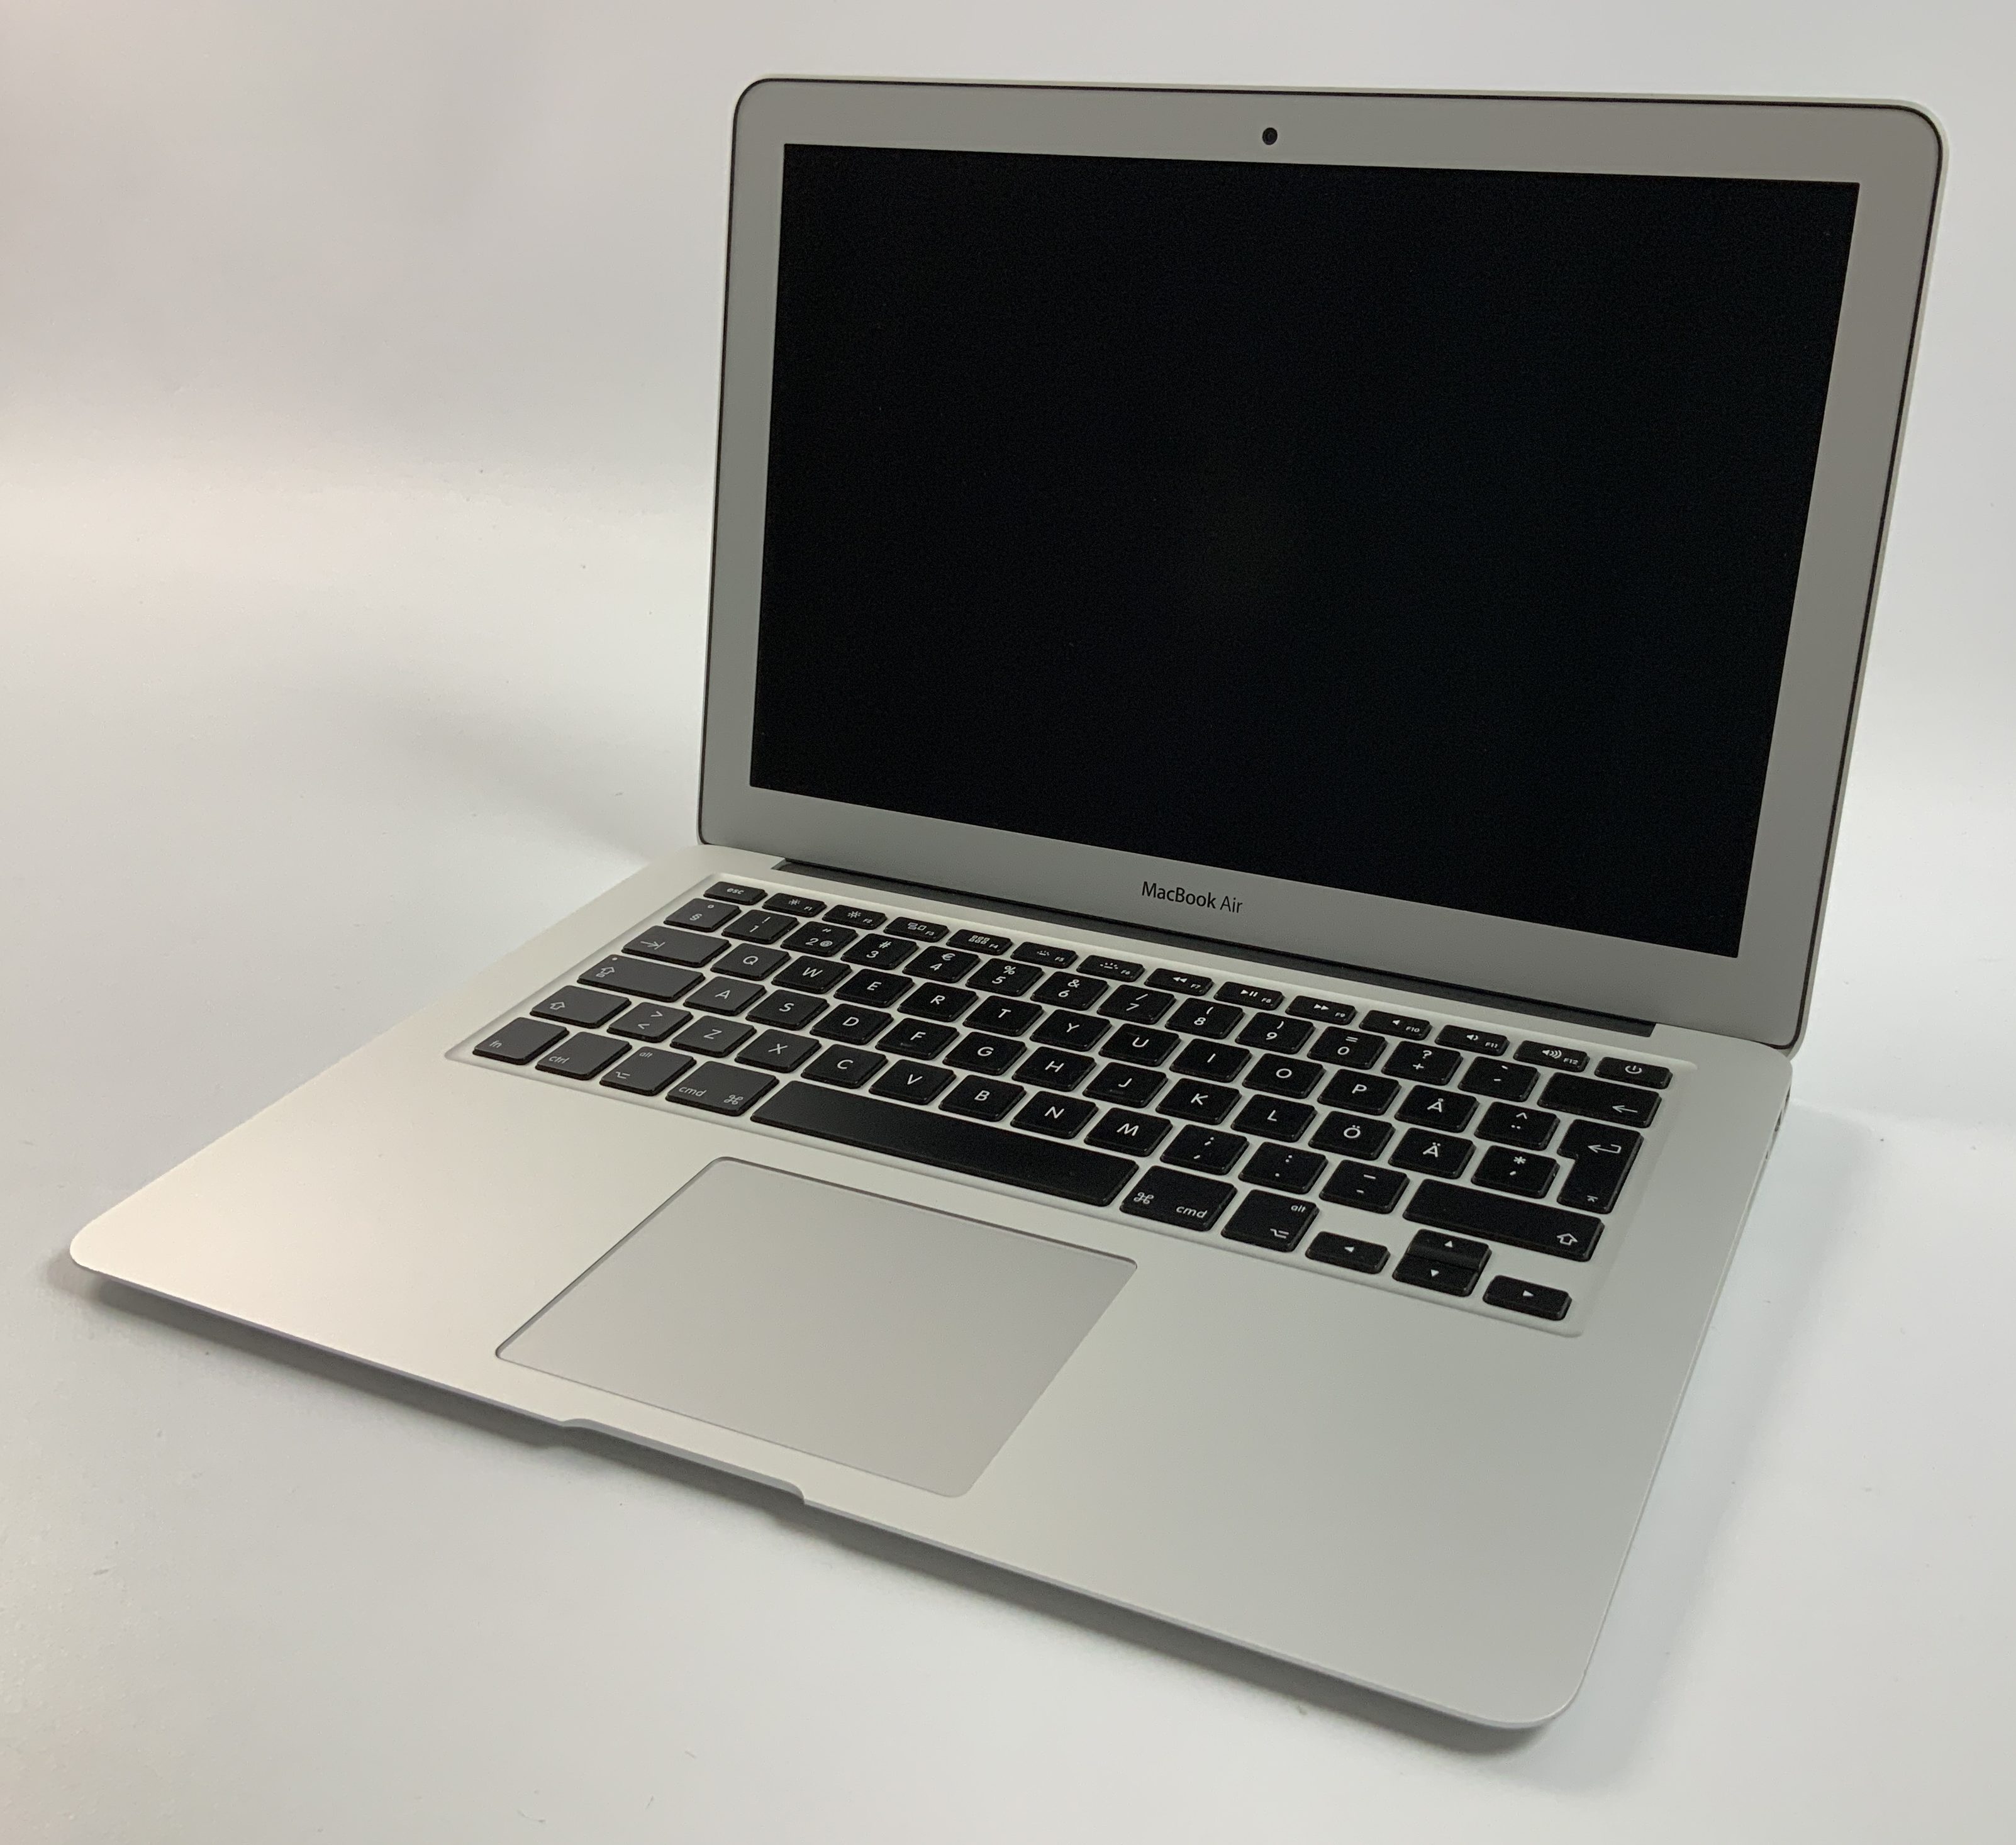 MacBook Air 13" Early 2015 (Intel Core i5 1.6 GHz 4 GB RAM 256 GB SSD), Intel Core i5 1.6 GHz, 4 GB RAM, 256 GB SSD, bild 1